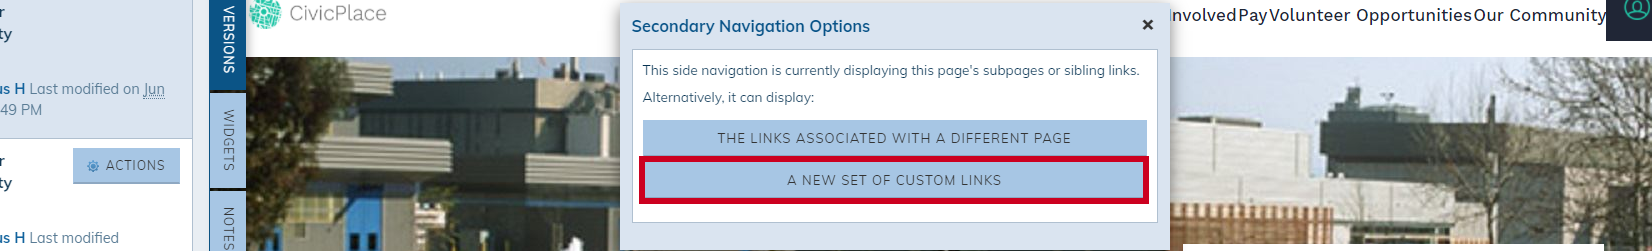 Web Central, Secondary Navigation Options Dialog, A New Set of Custom Links Button.